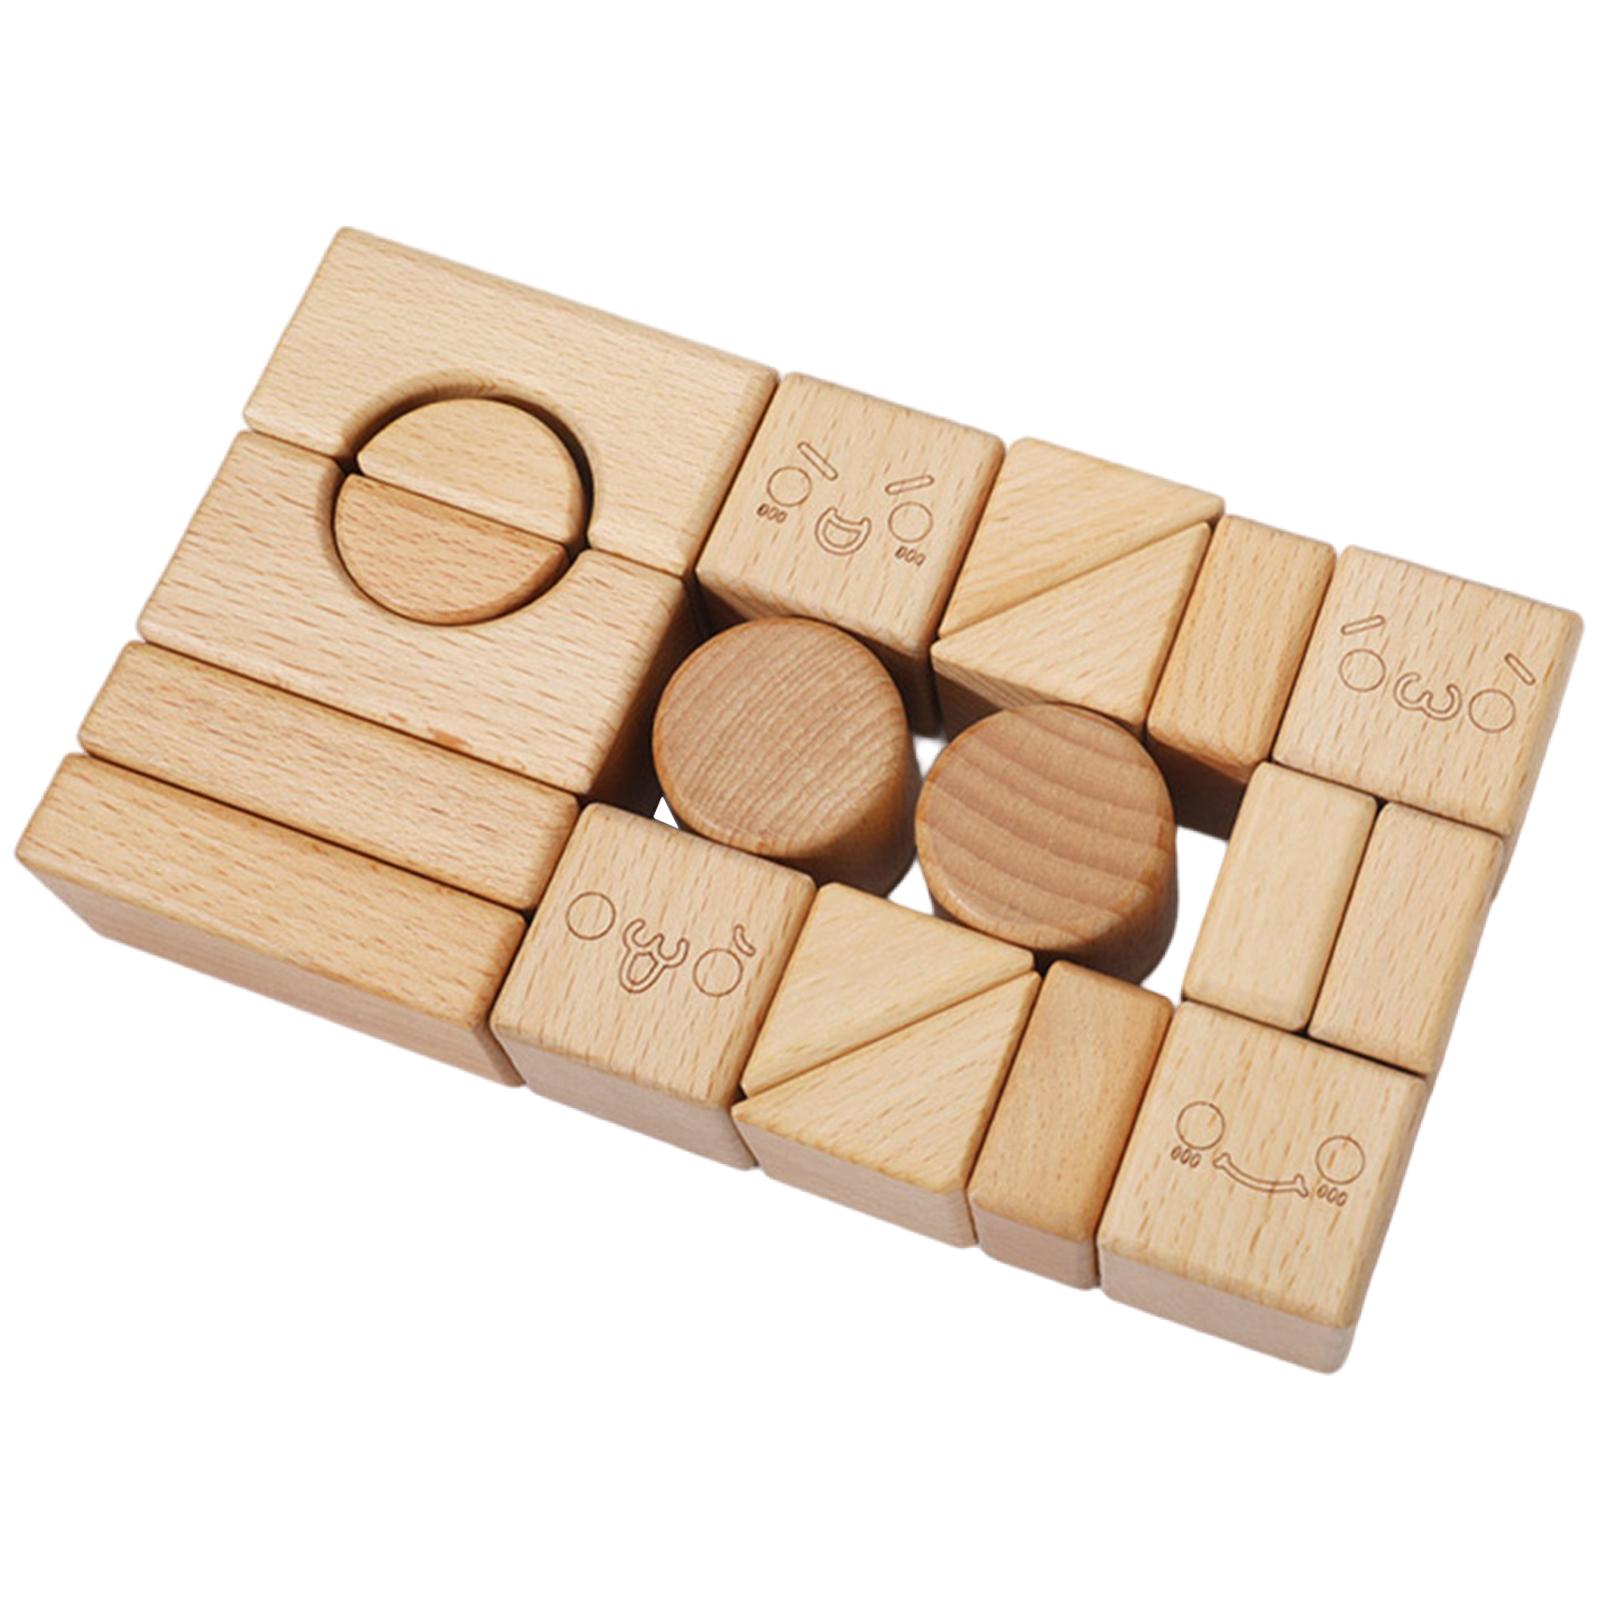 Solid Wood Stacking Block Toy Shape Cognition DIY Wood Block Kit for Kids Children